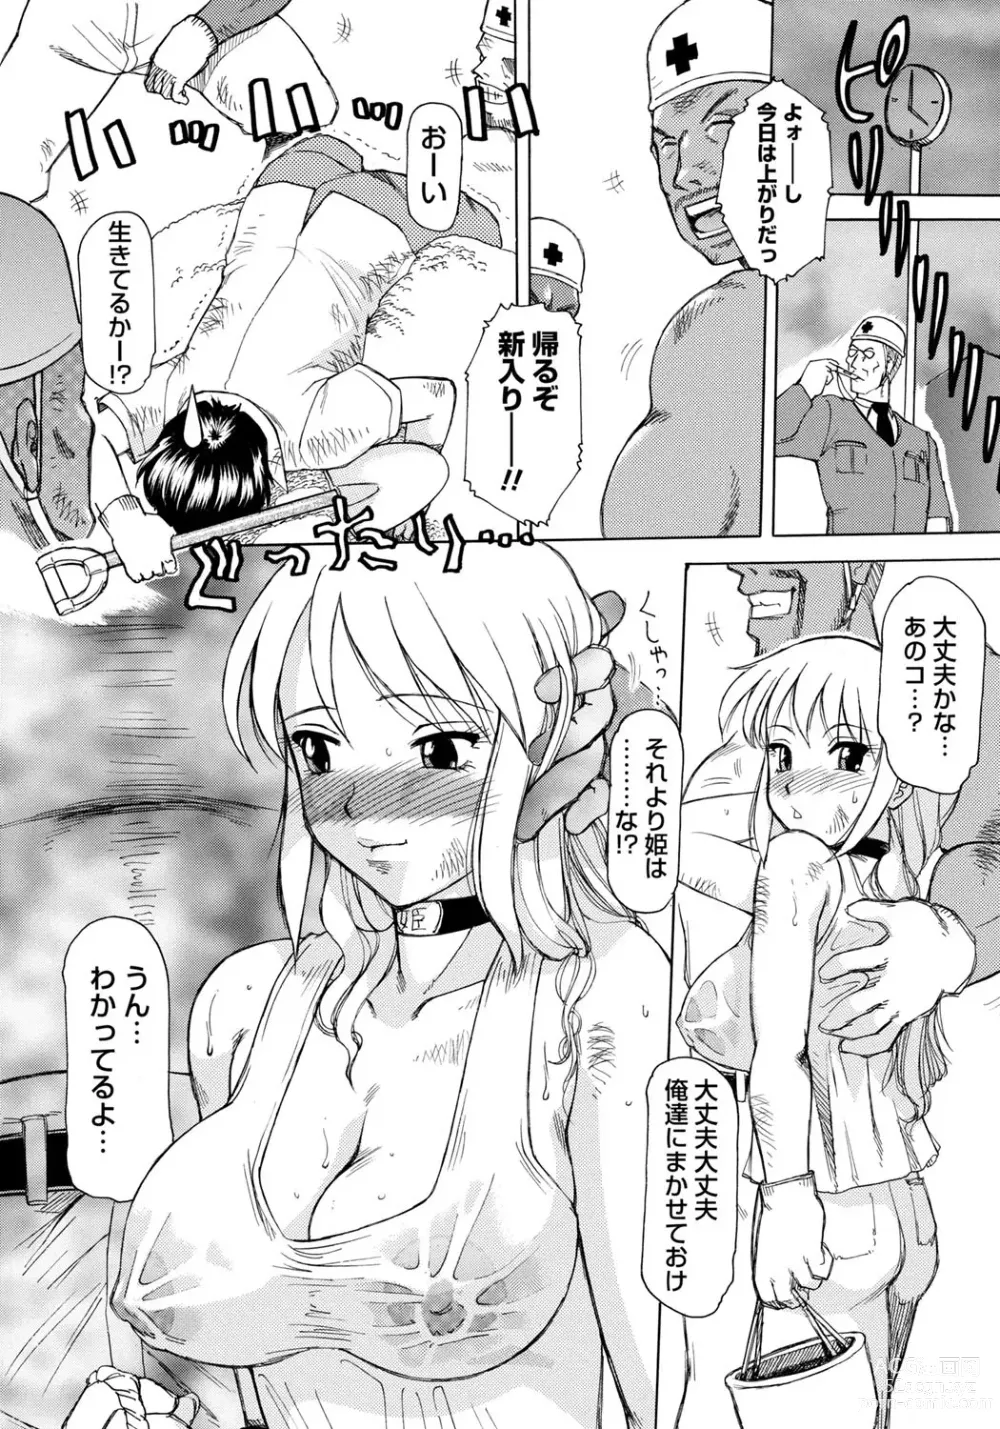 Page 9 of manga Inen Gangu Hime Naburi